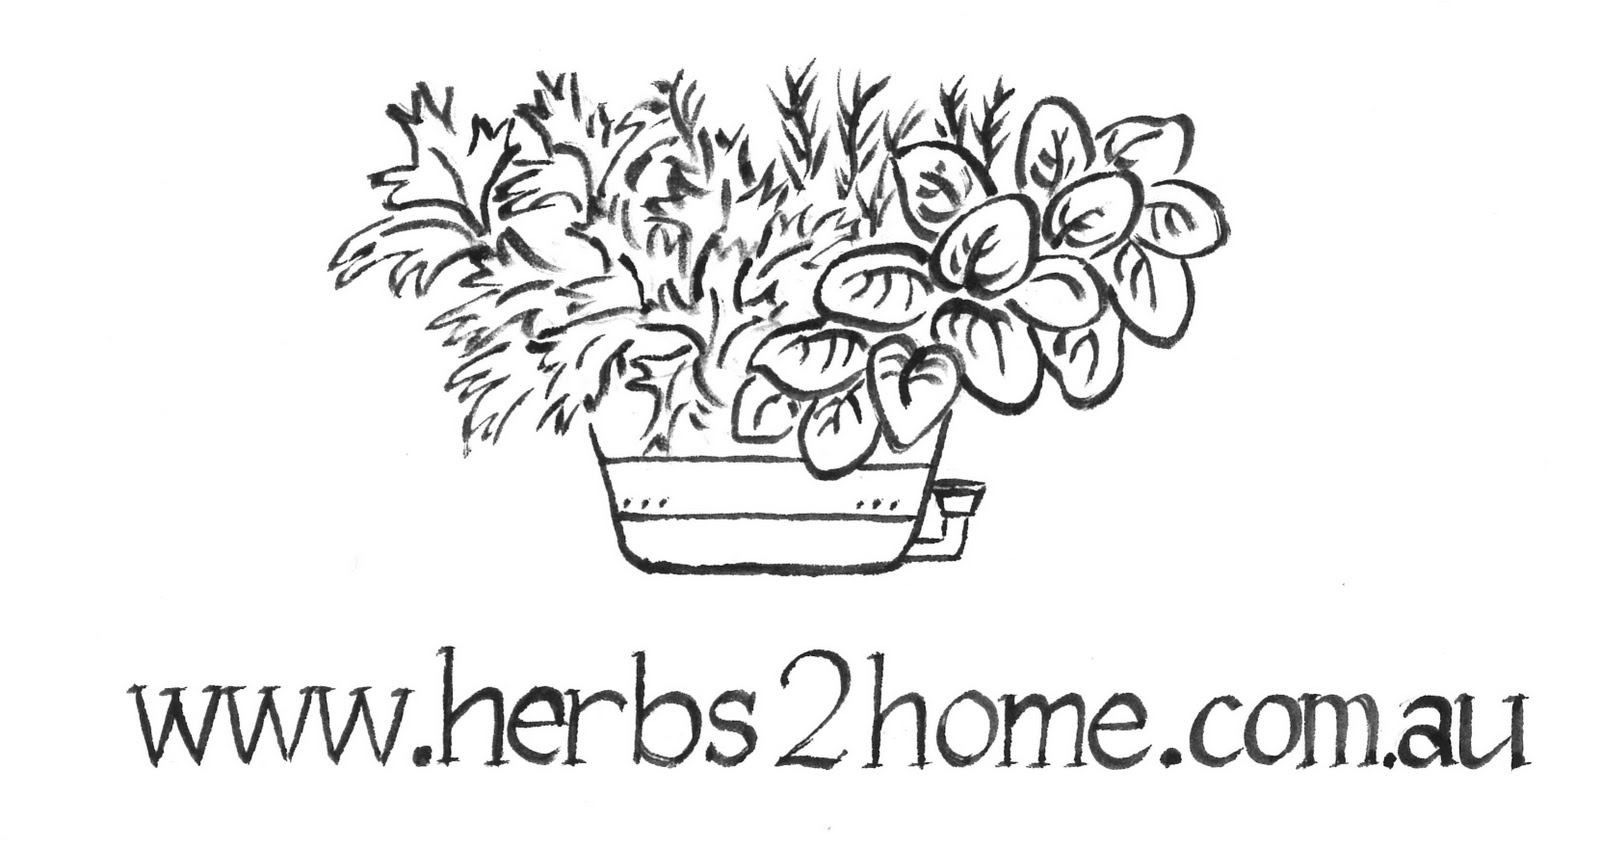 www.herbs2home.com.au